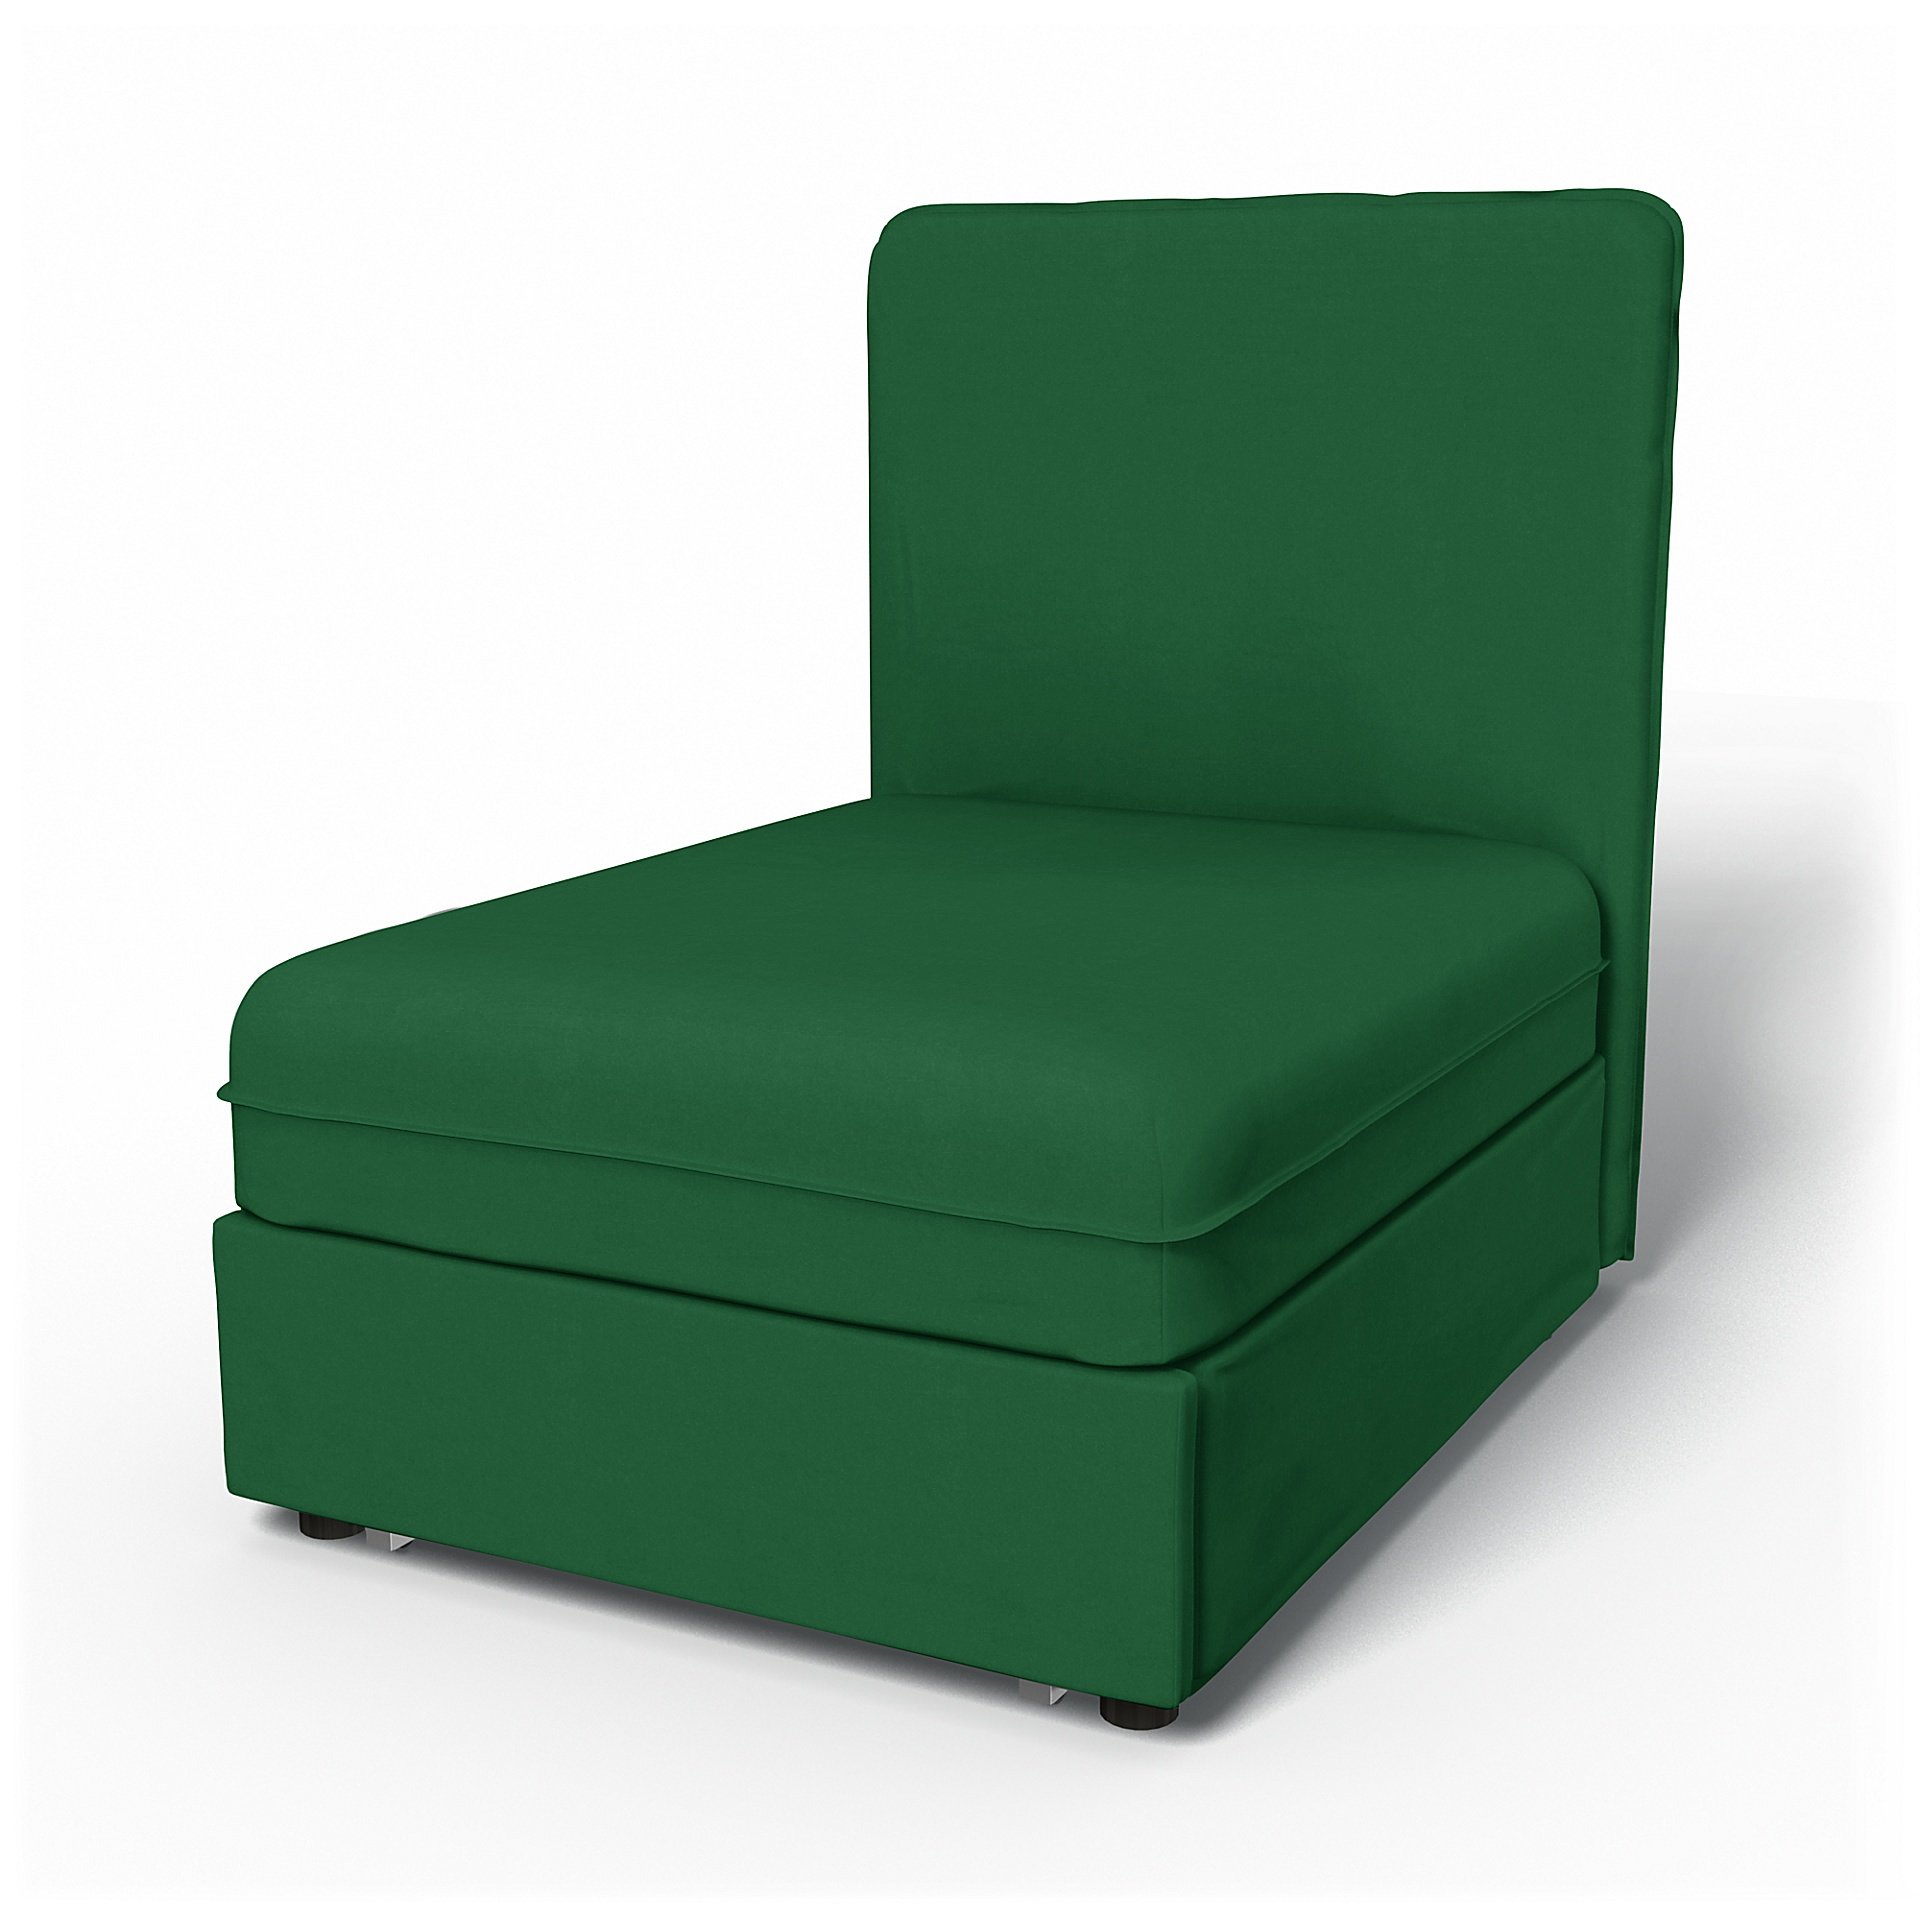 IKEA - Vallentuna Seat Module with High Back Sofa Bed Cover (80x100x46cm), Abundant Green, Velvet - 